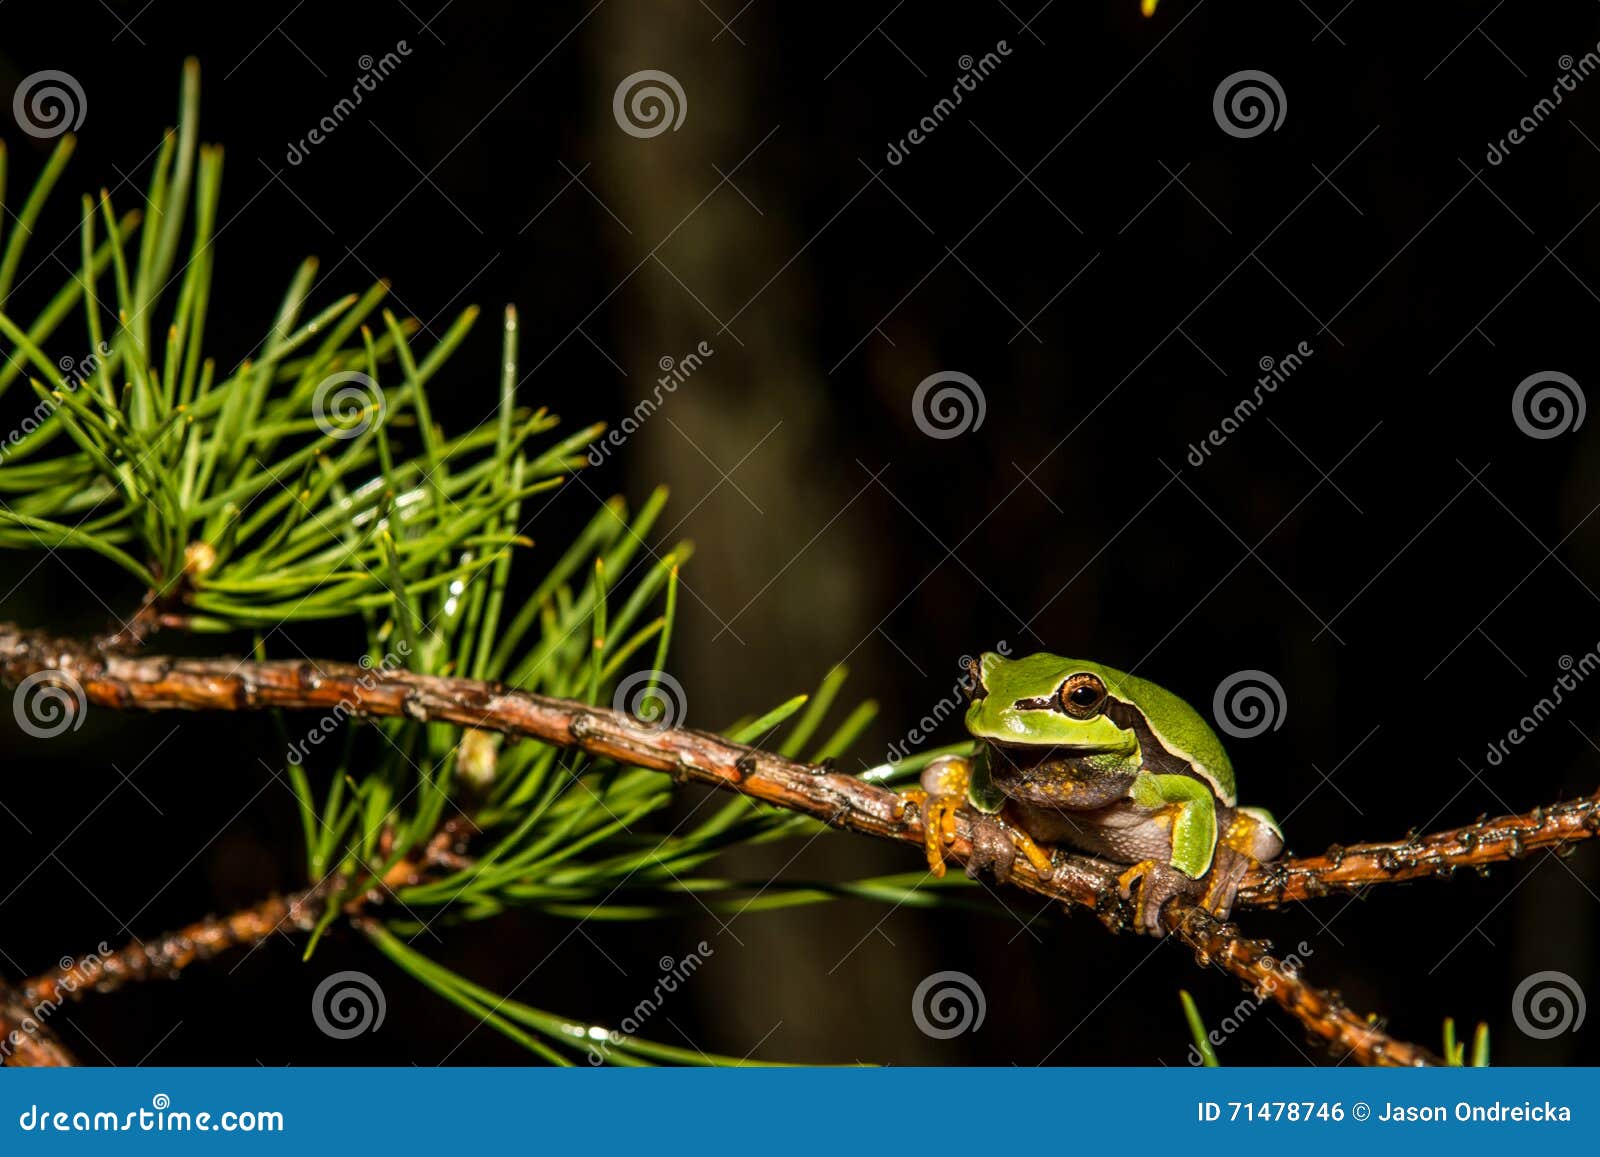 pine barrens treefrog